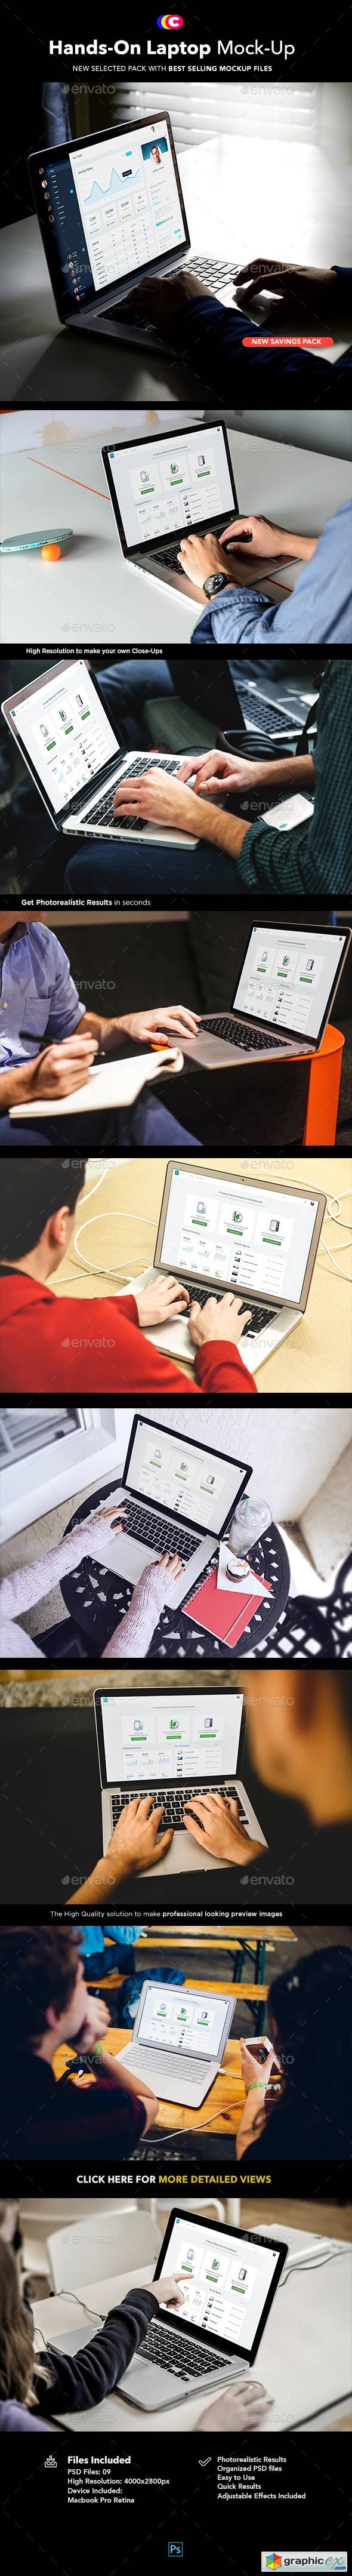 Hands on Laptop MockUp | Workspace Edition